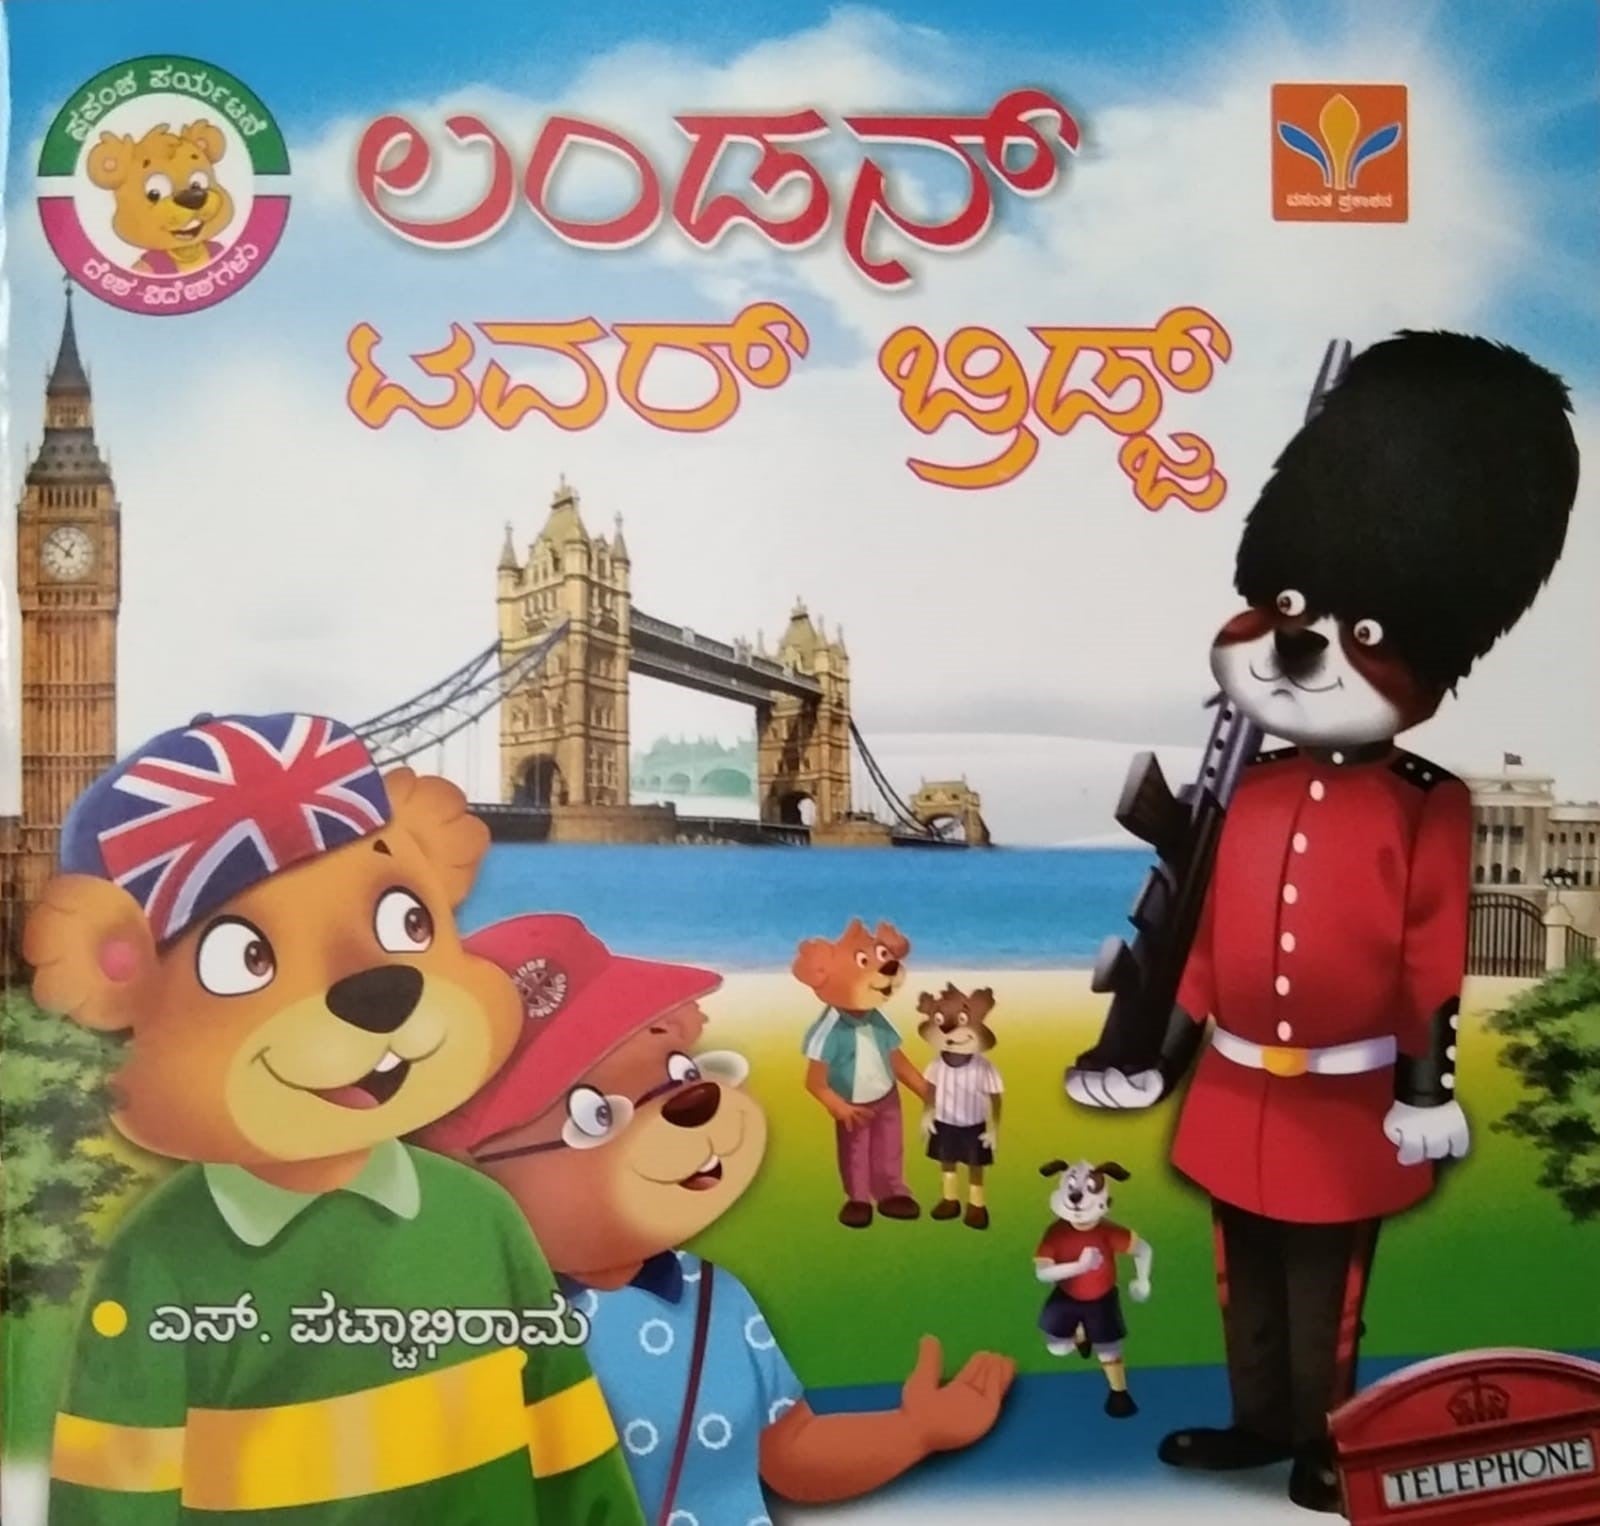 London Tower Bridge is a Children's Stories Kannada Book Written by S. Pattabhirama and Published by Vasantha Prakashana